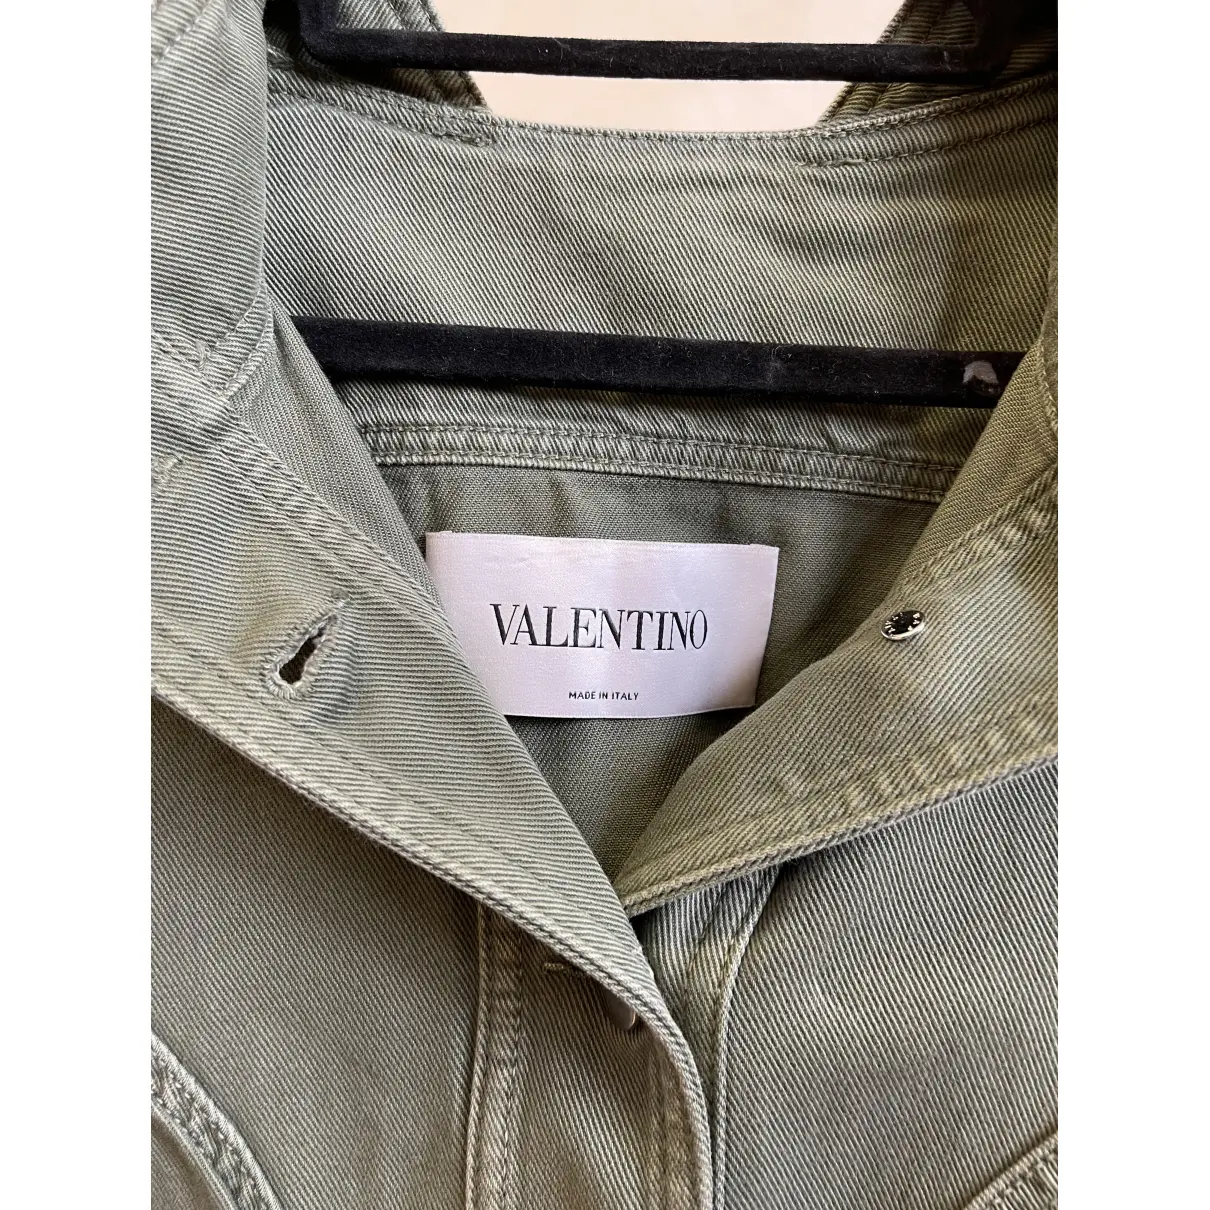 Buy Valentino Garavani Jacket online